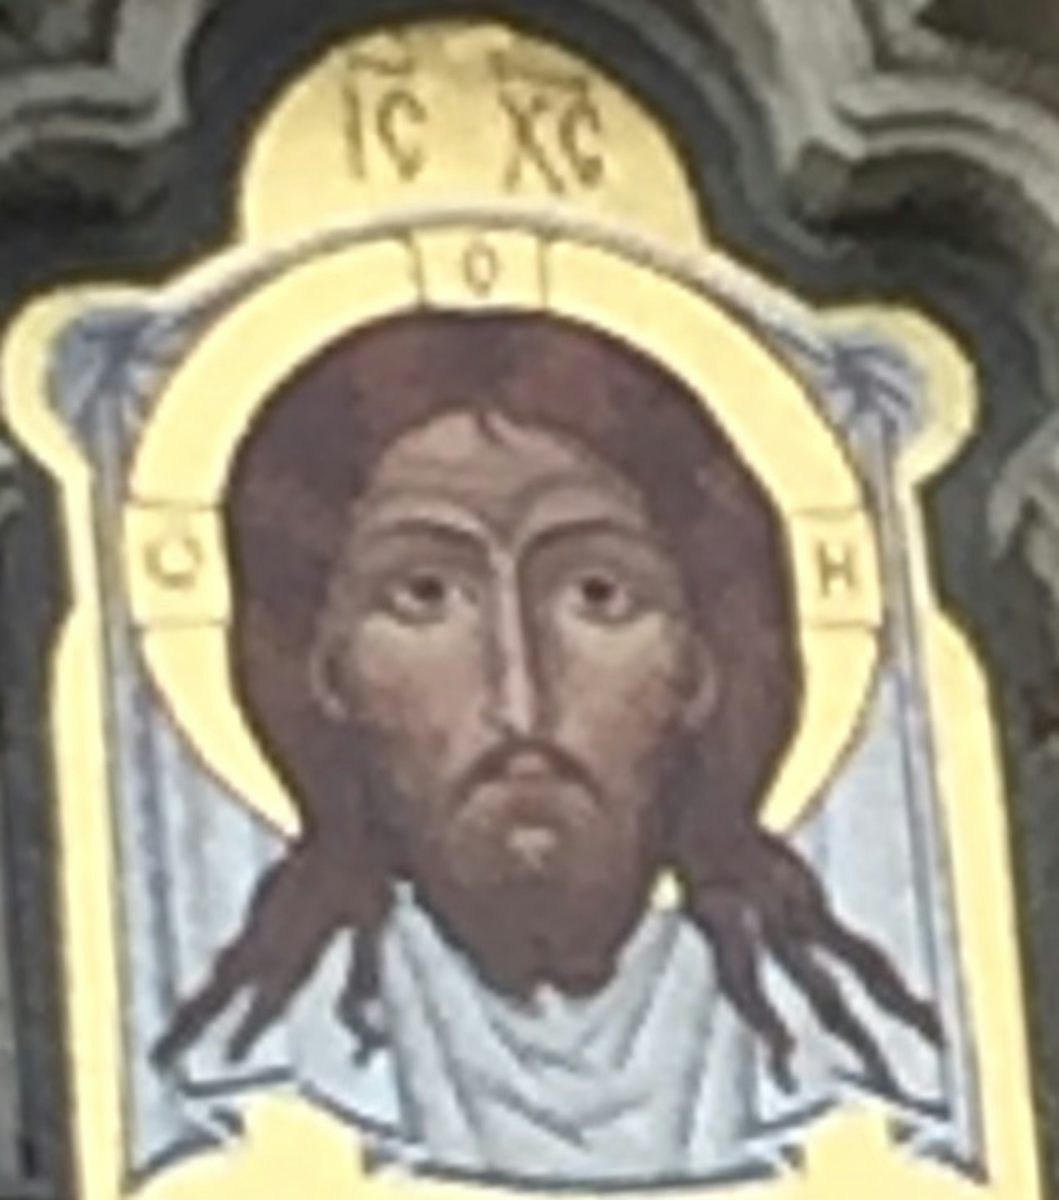 Icon of Jesus Christ